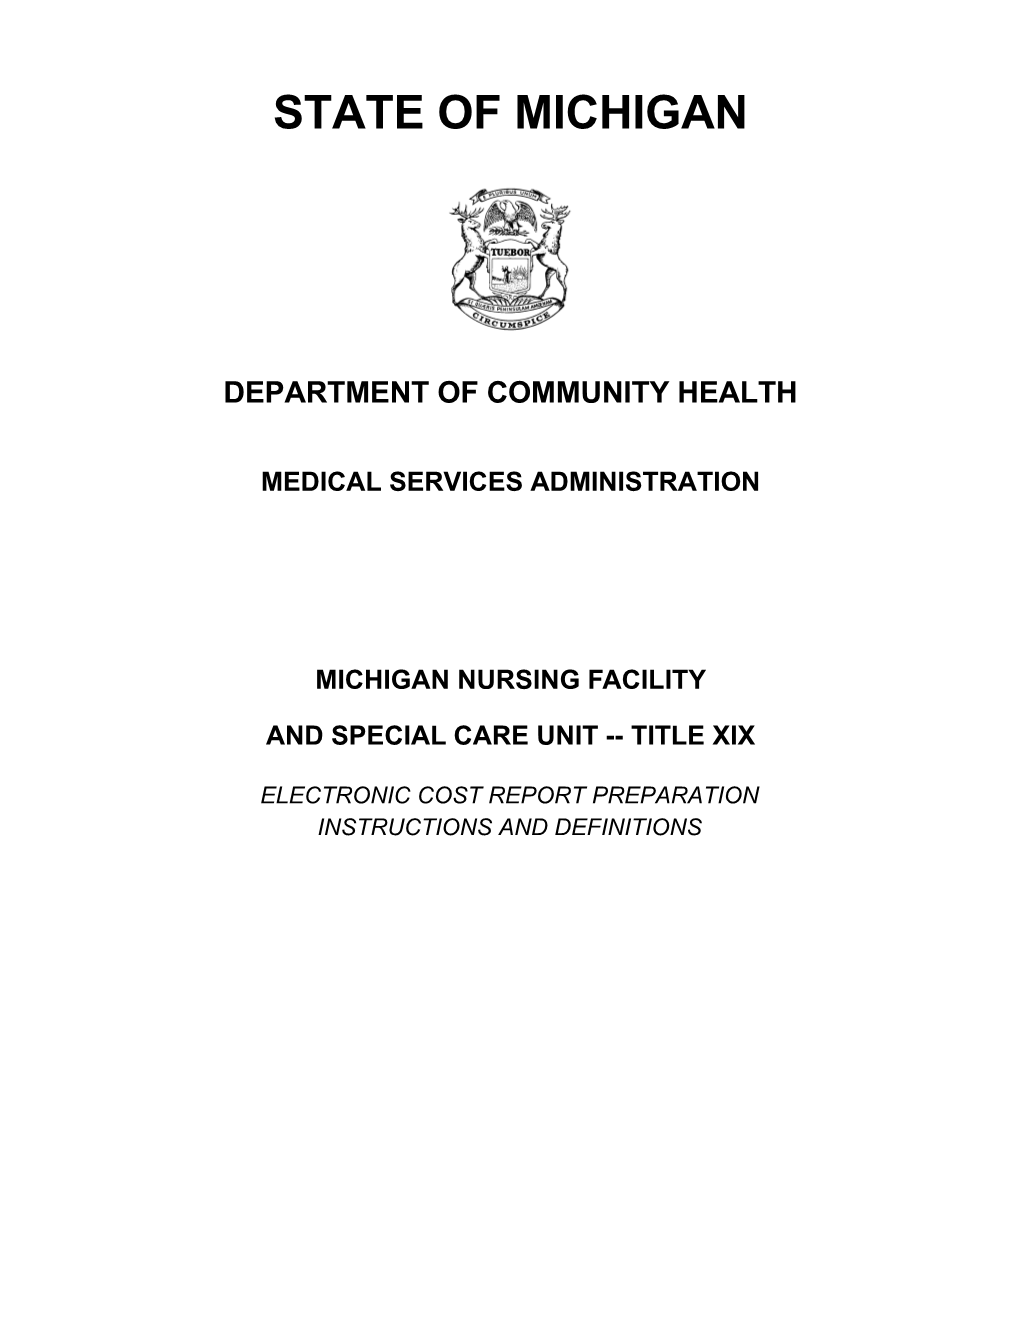 Michigan Nursing Facility and Special Care Unit - Title Xix